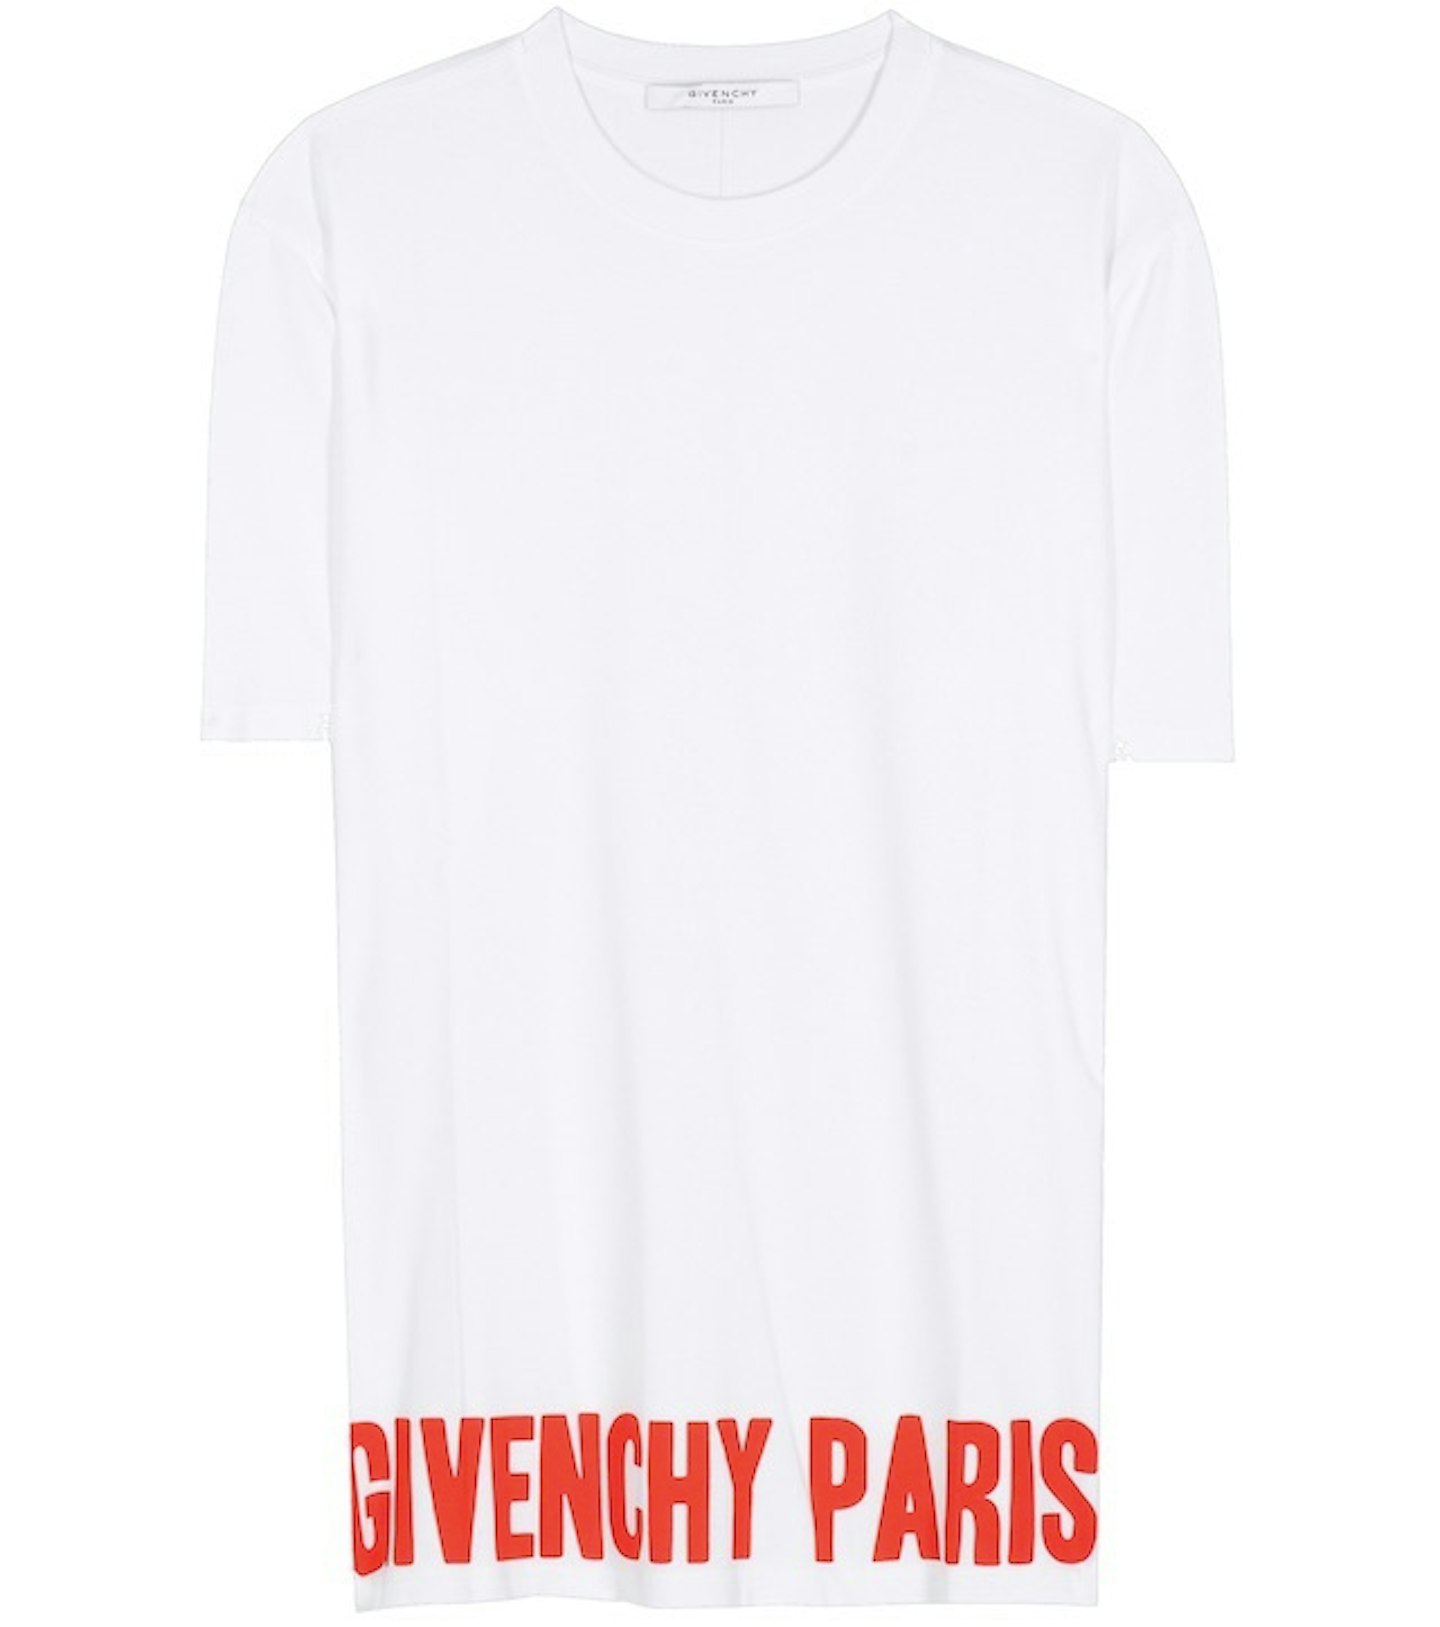 Givenchy Paris tee